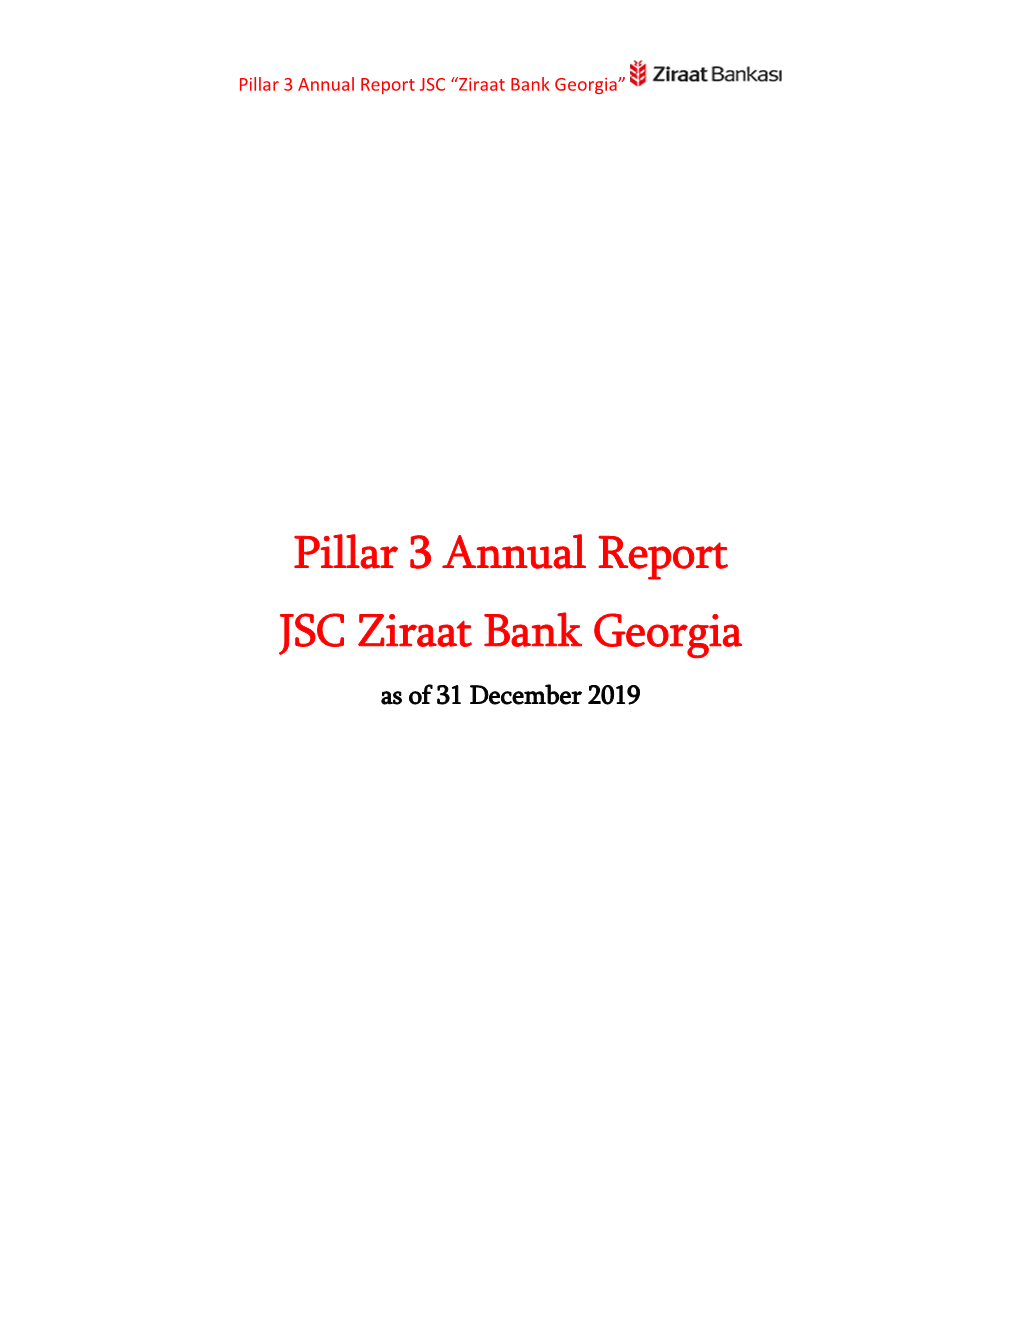 Pillar 3 Annual Report 2019